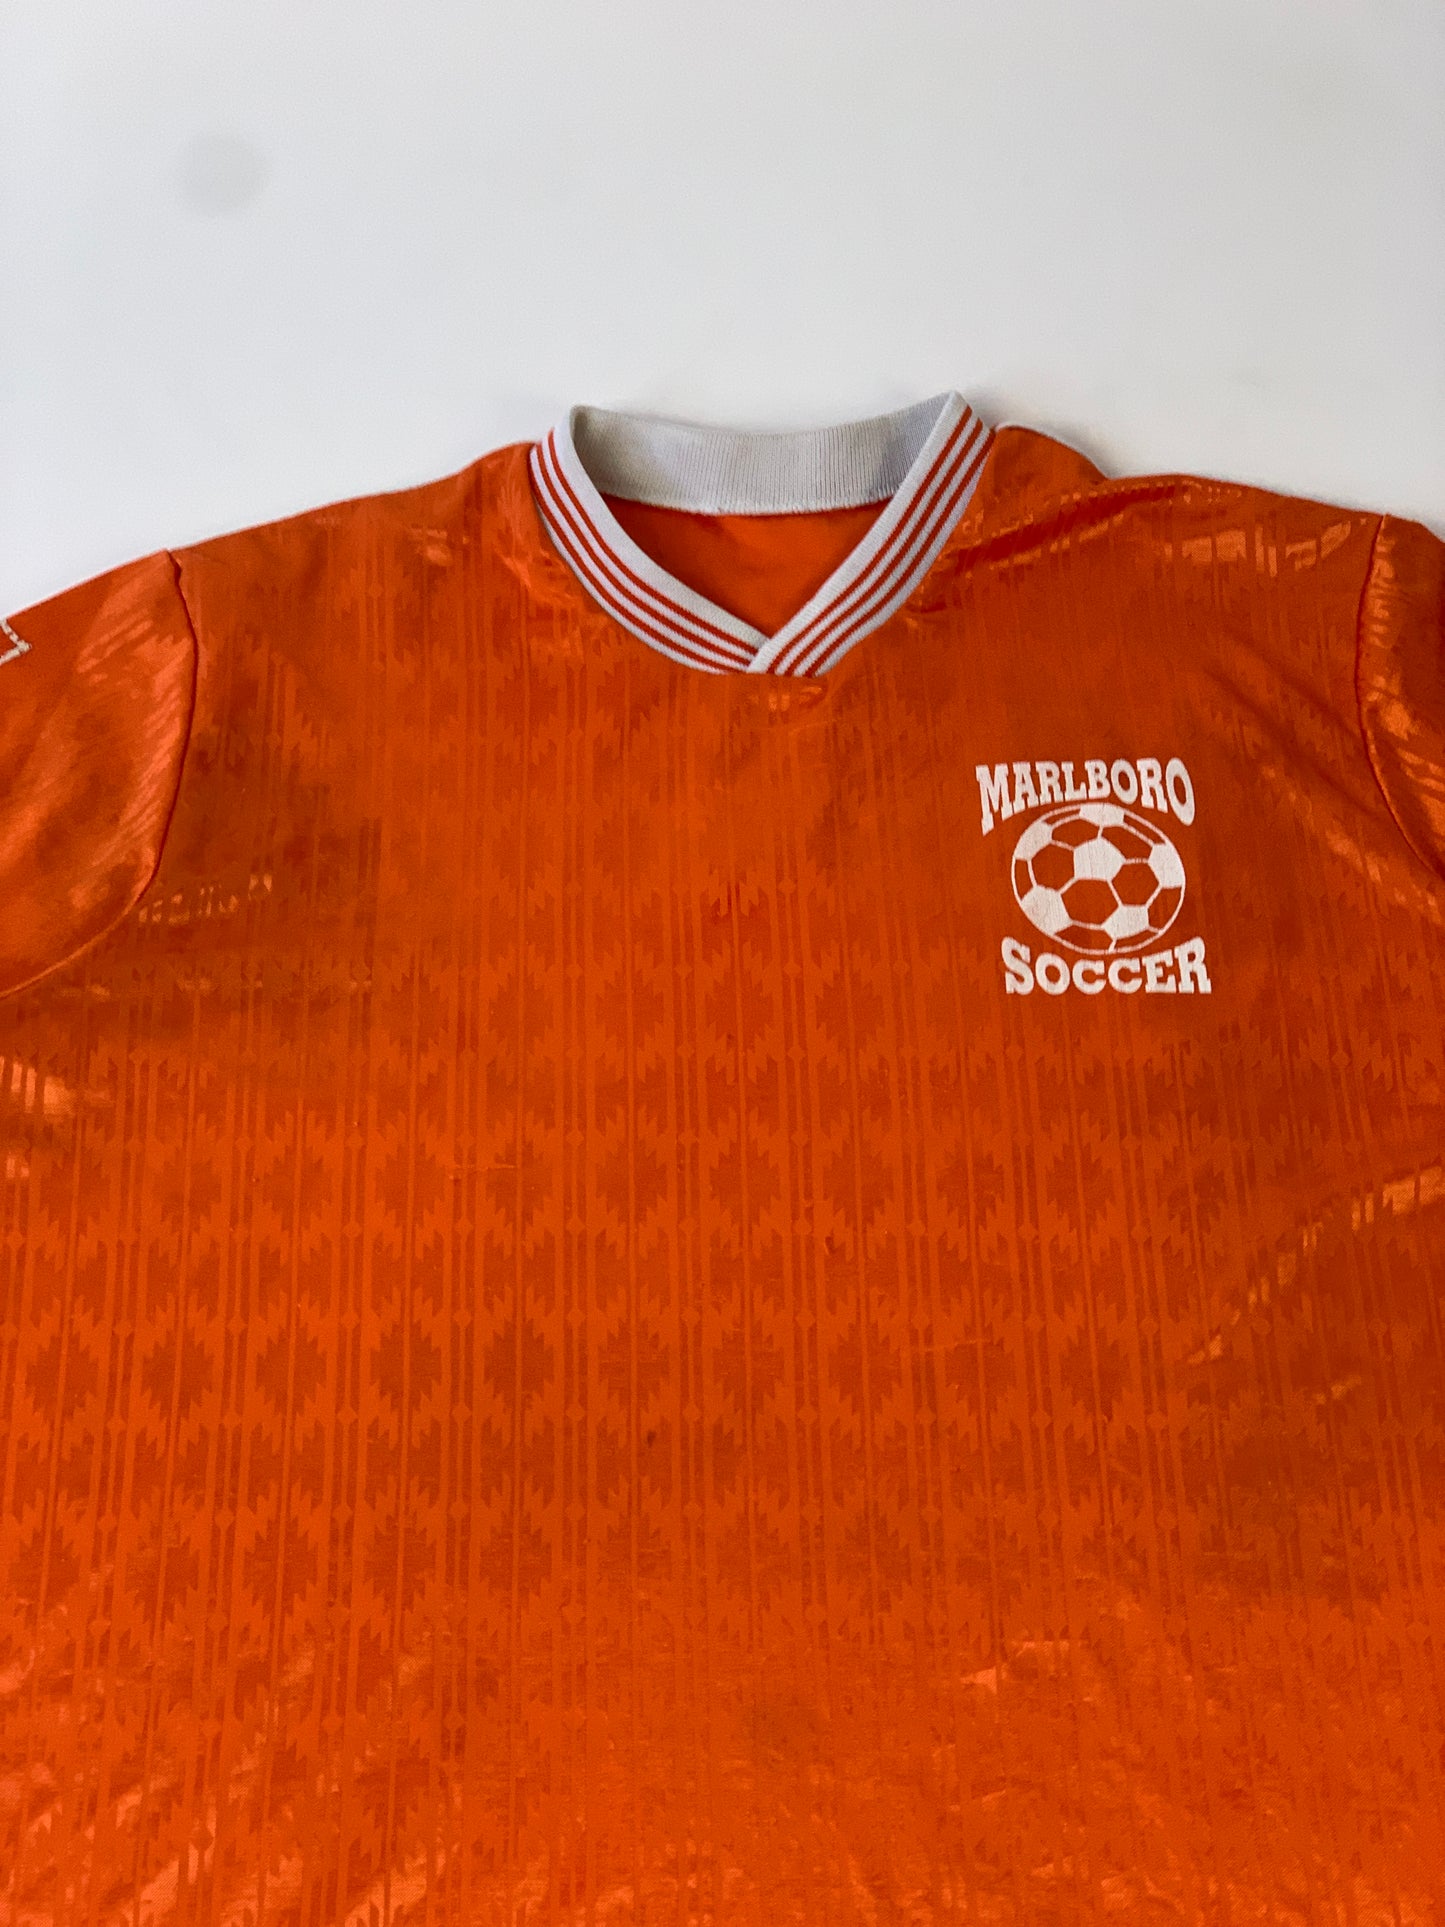 Marlboro Soccer Vintage Jersey - XL